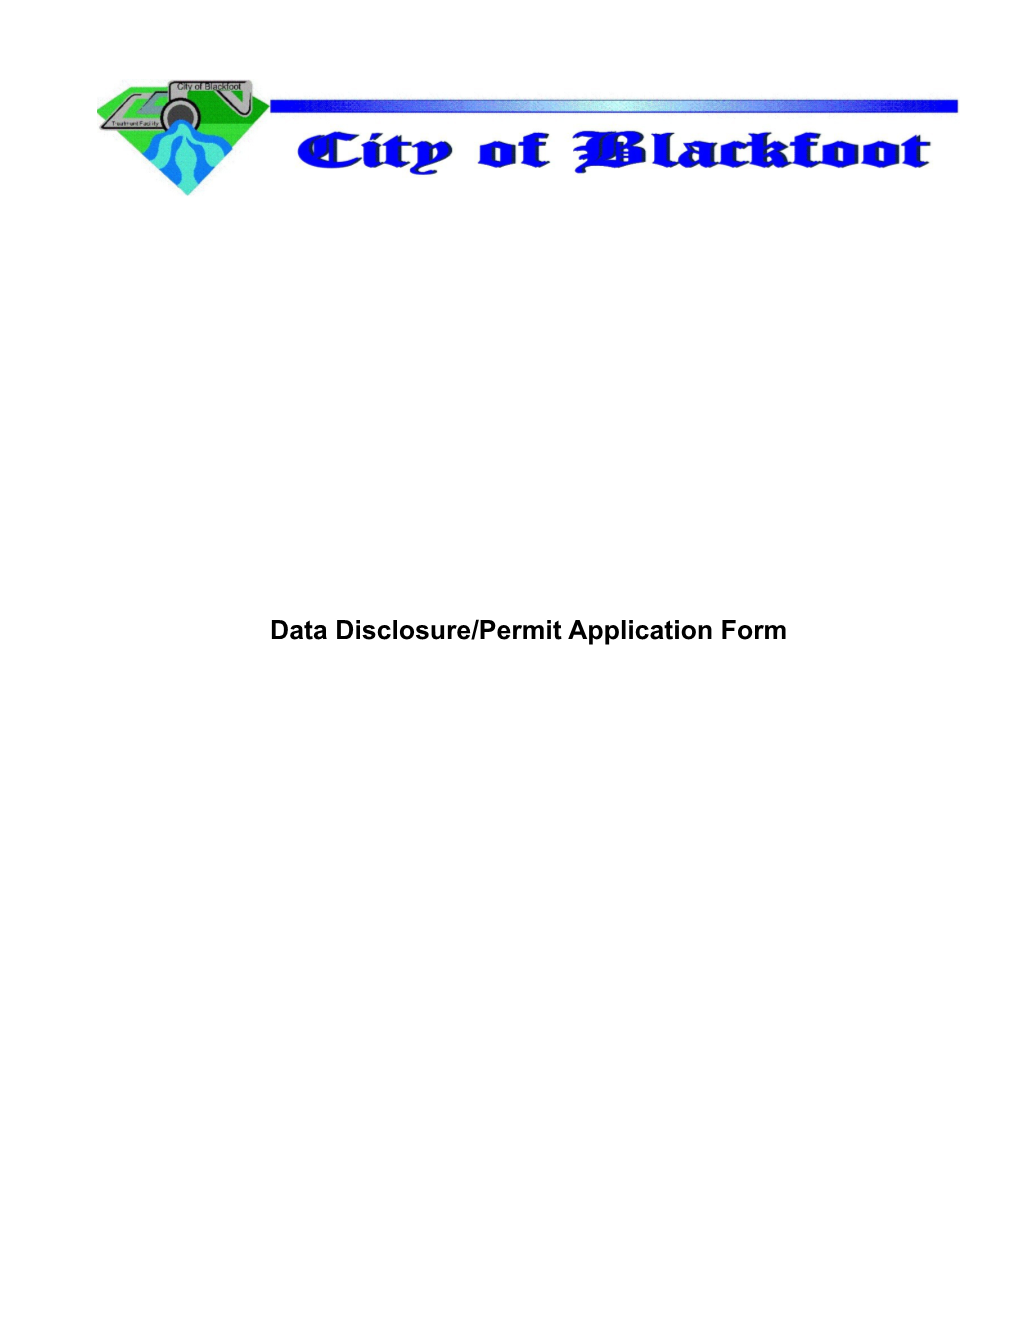 Data Disclosure Form